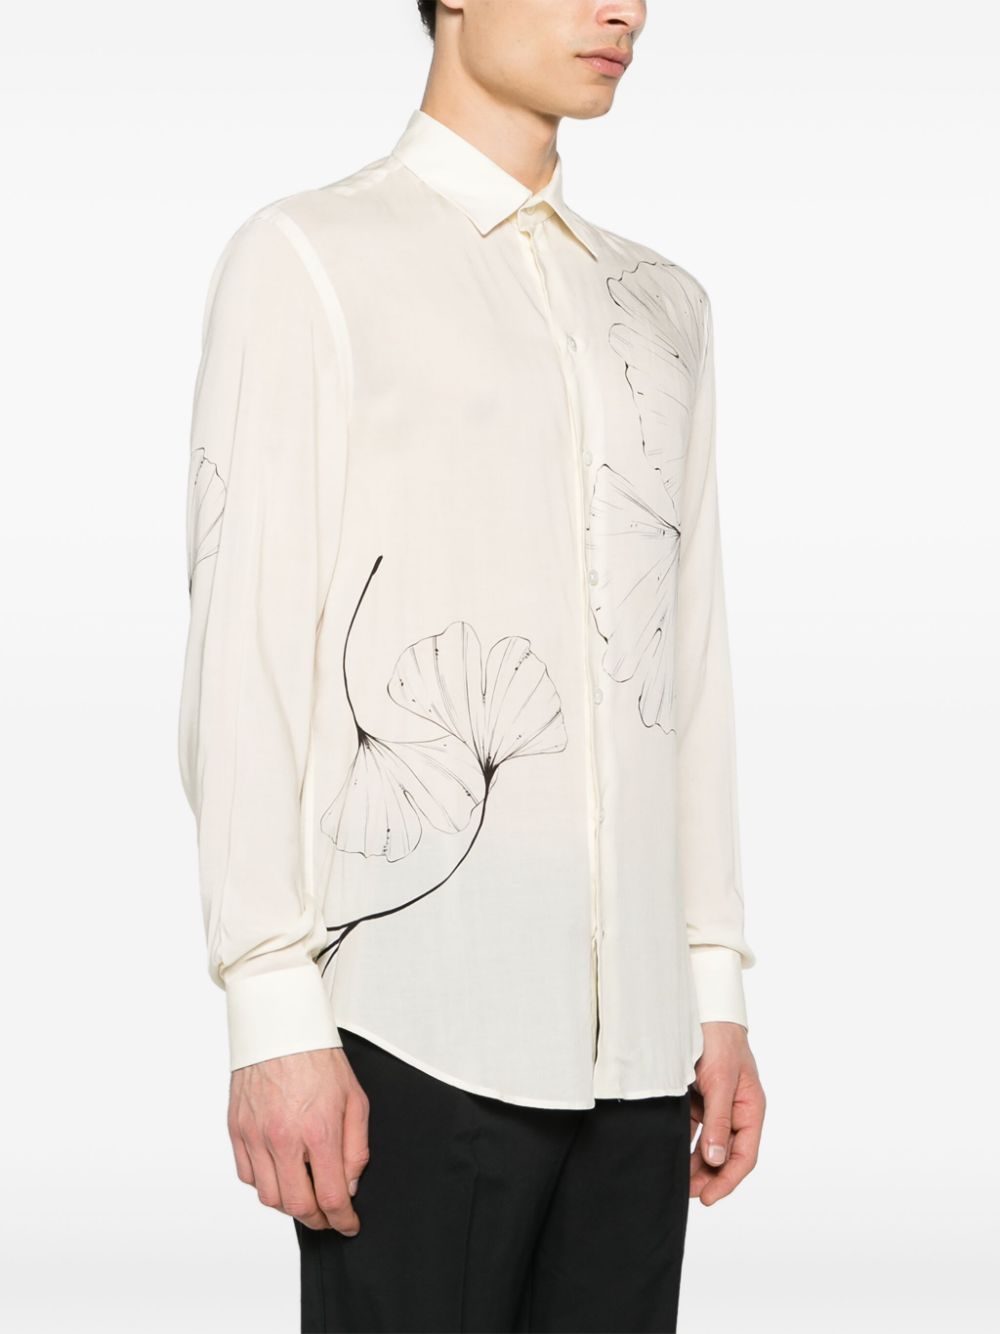 White shirt with print